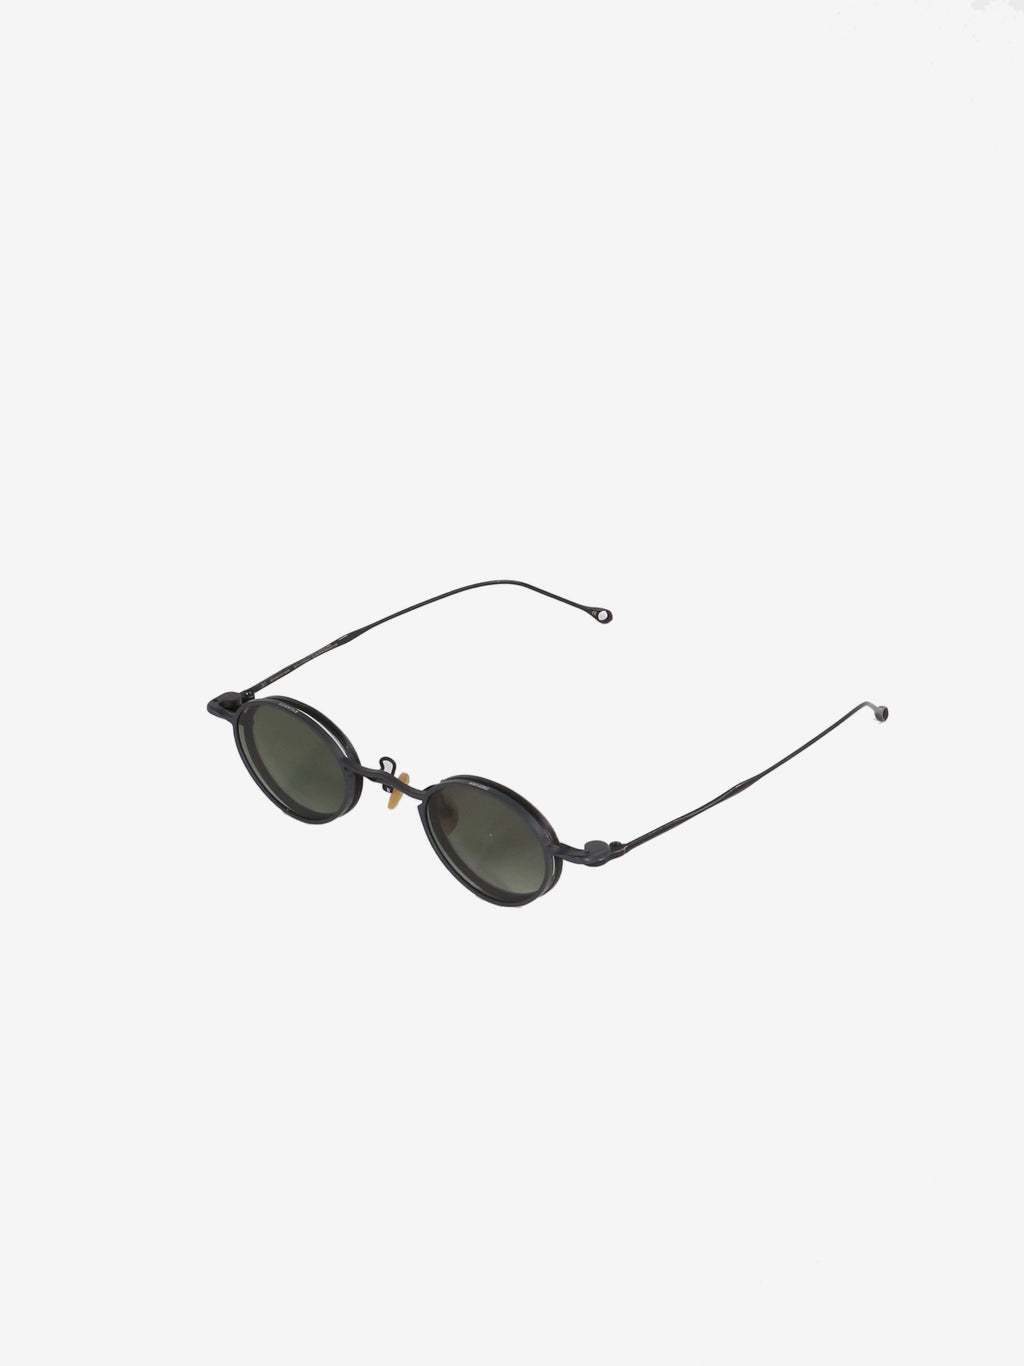 RIGARDS X ZIGGY CHEN Pure Titanium Clip-on Sunglasses Vintage Black+Gray/Clear+Green.GR Lens/Vintage